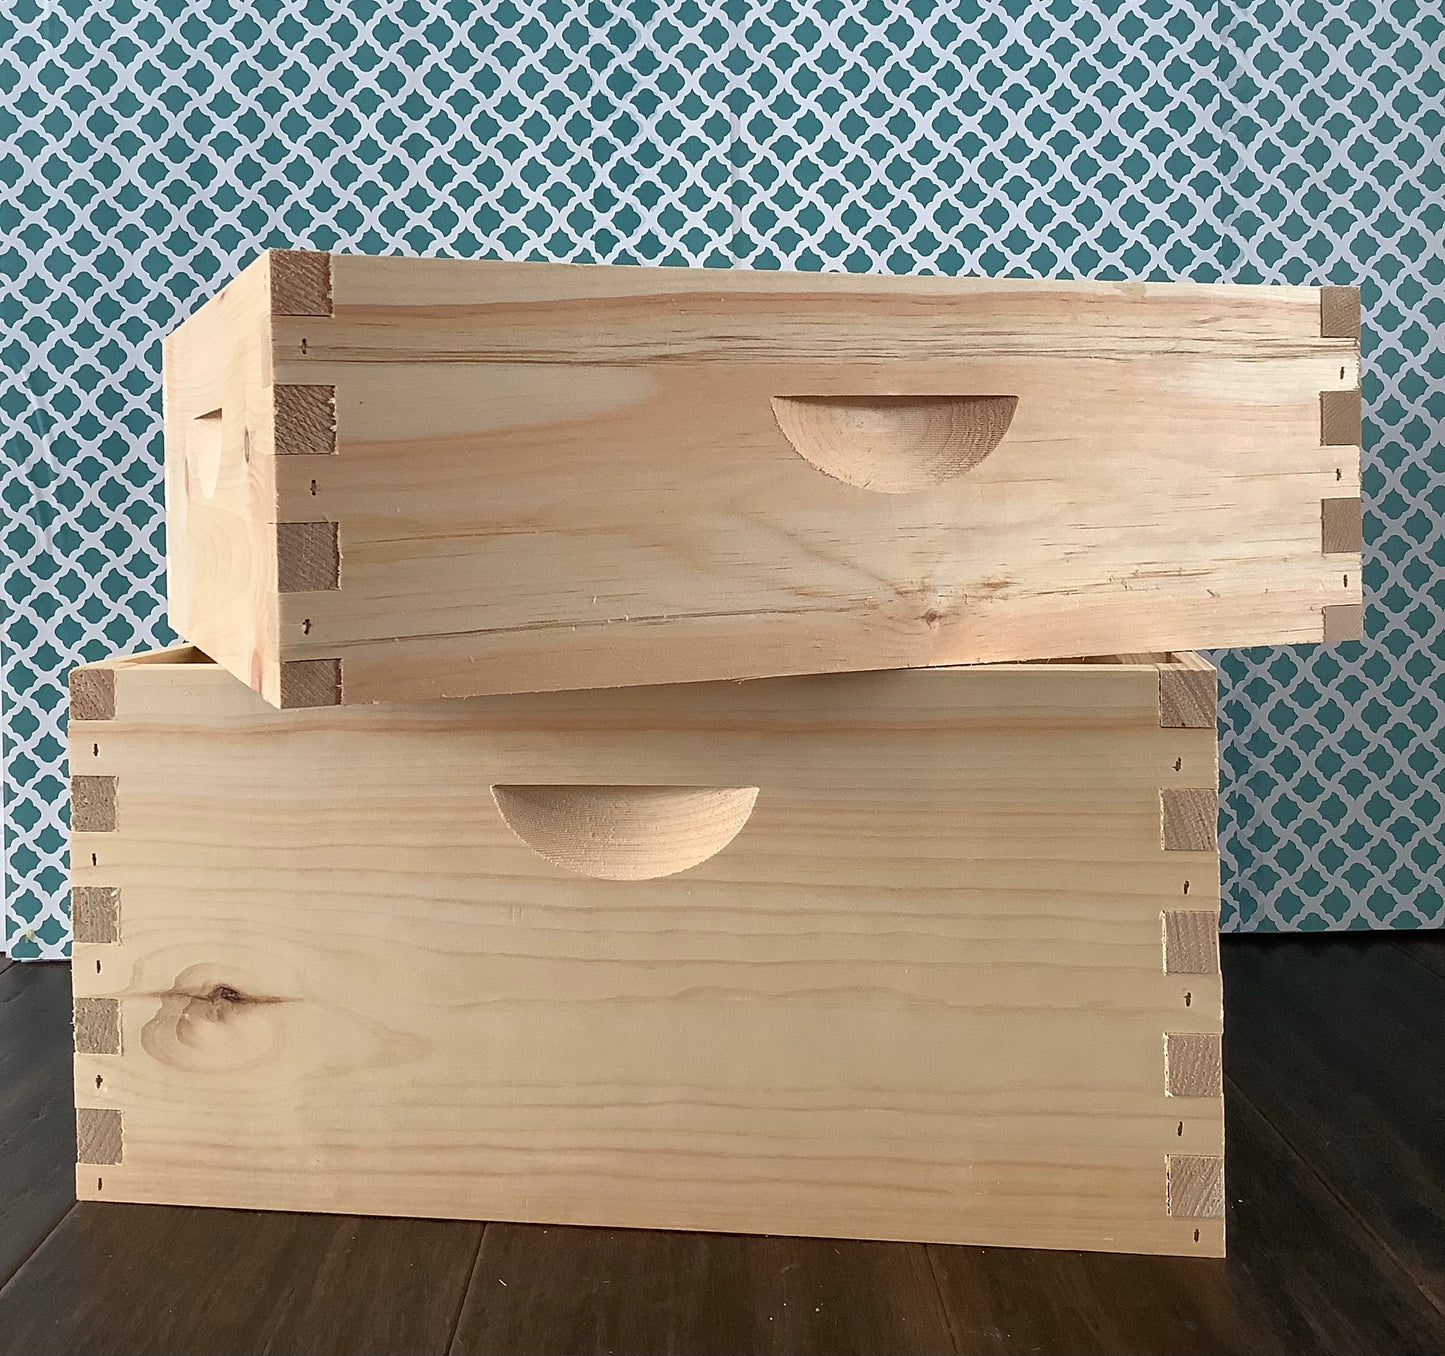 Hive Boxes-Assembled